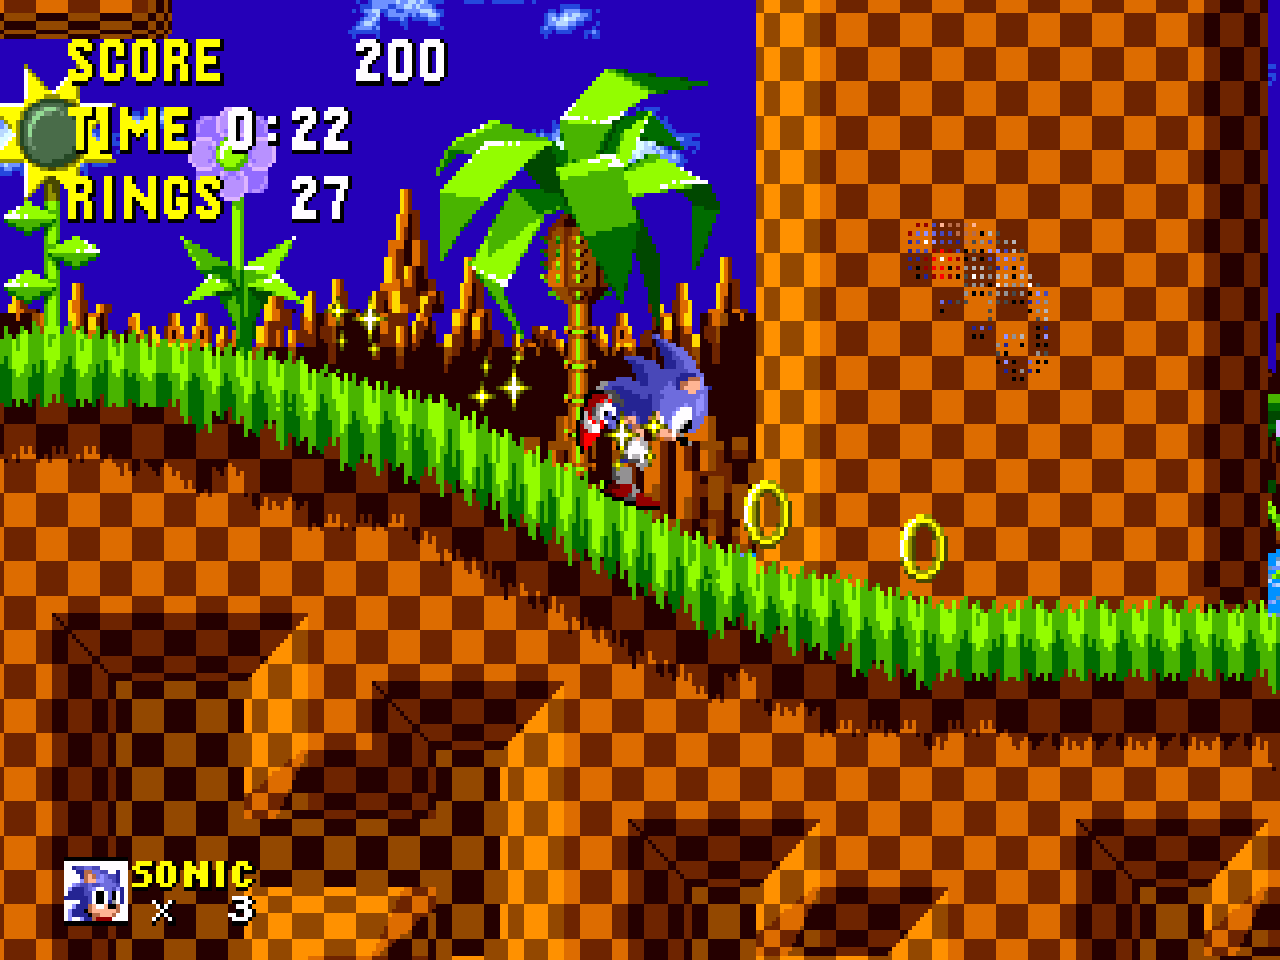 Sonic the hedgehog original game download